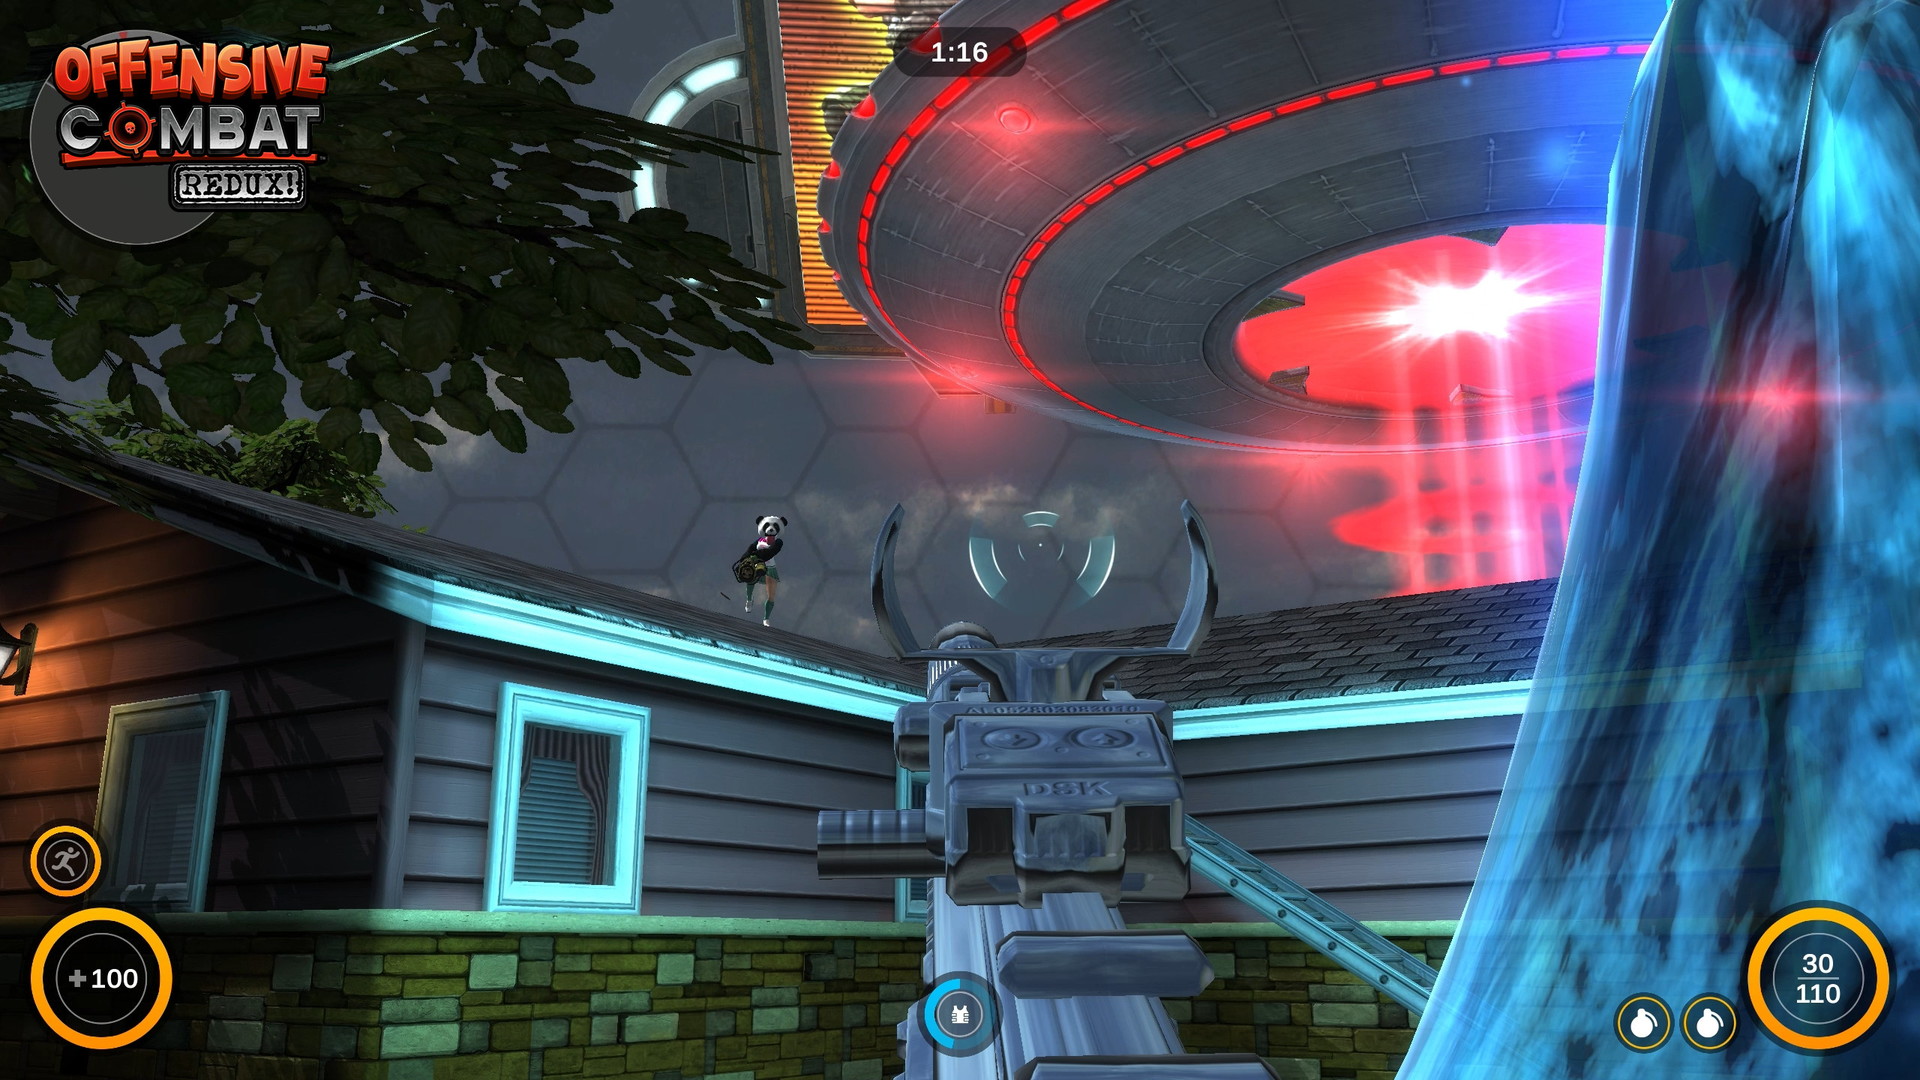 Offensive Combat: Redux! - screenshot 5